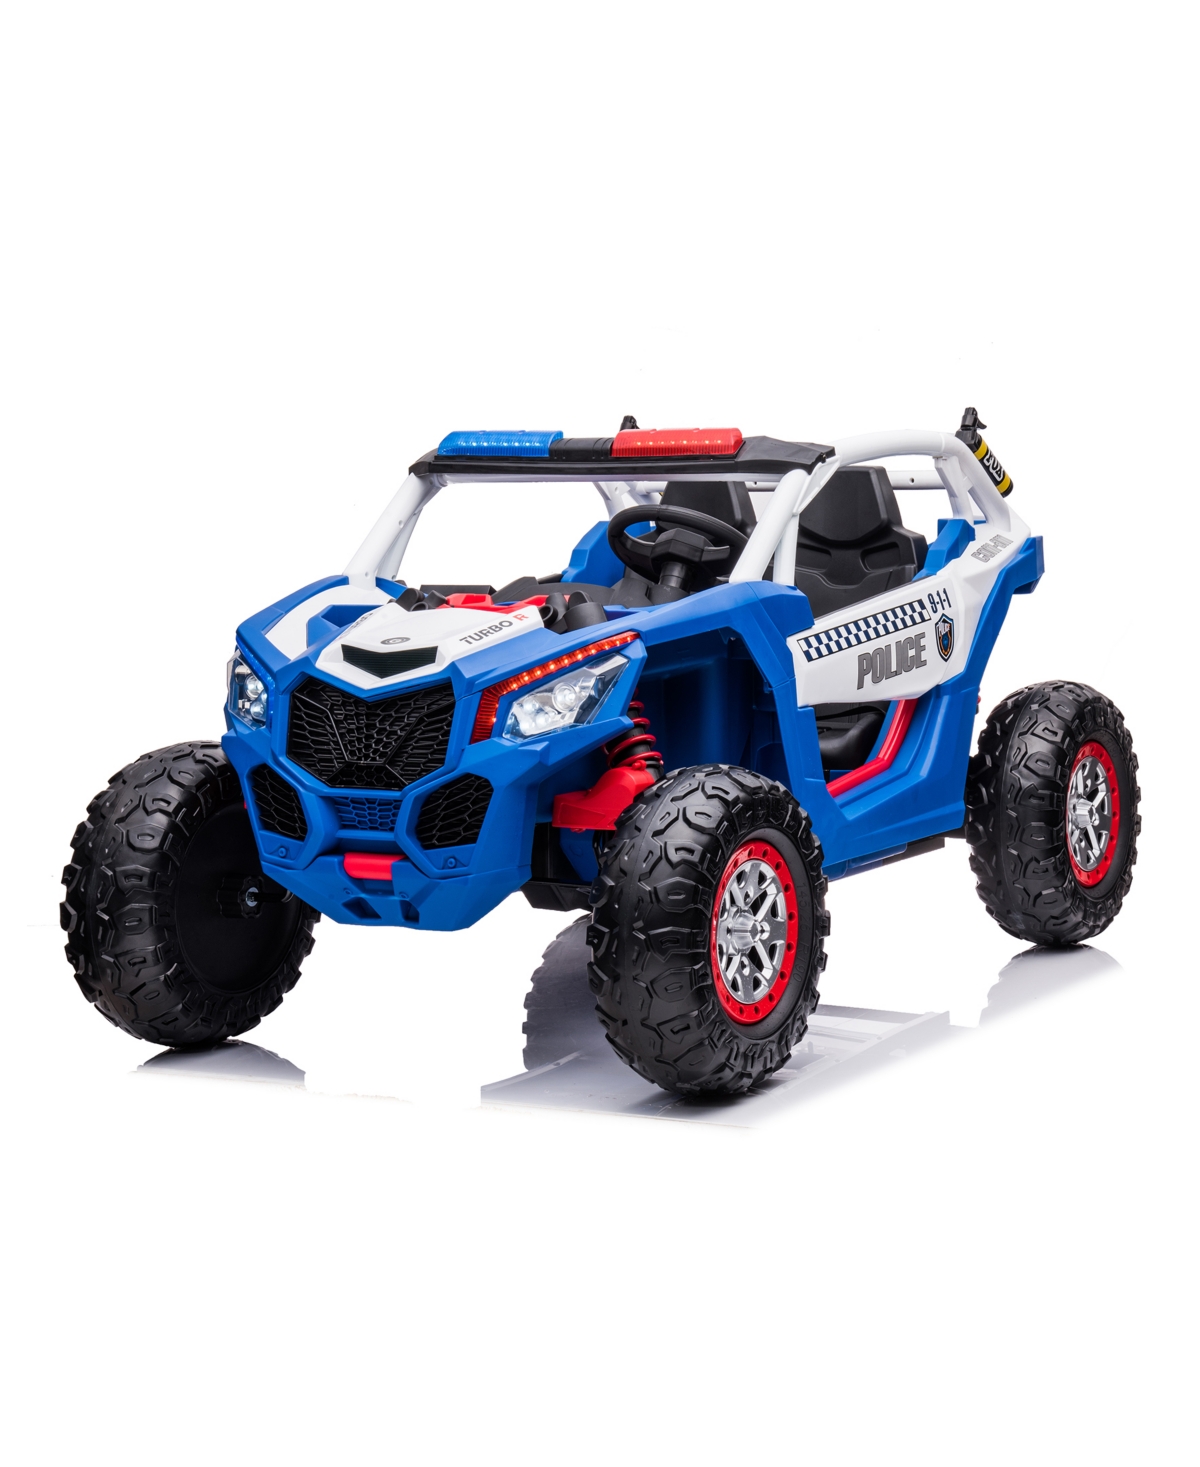 Freddo Toys Police 2 Seater Ride-on Car In Blue